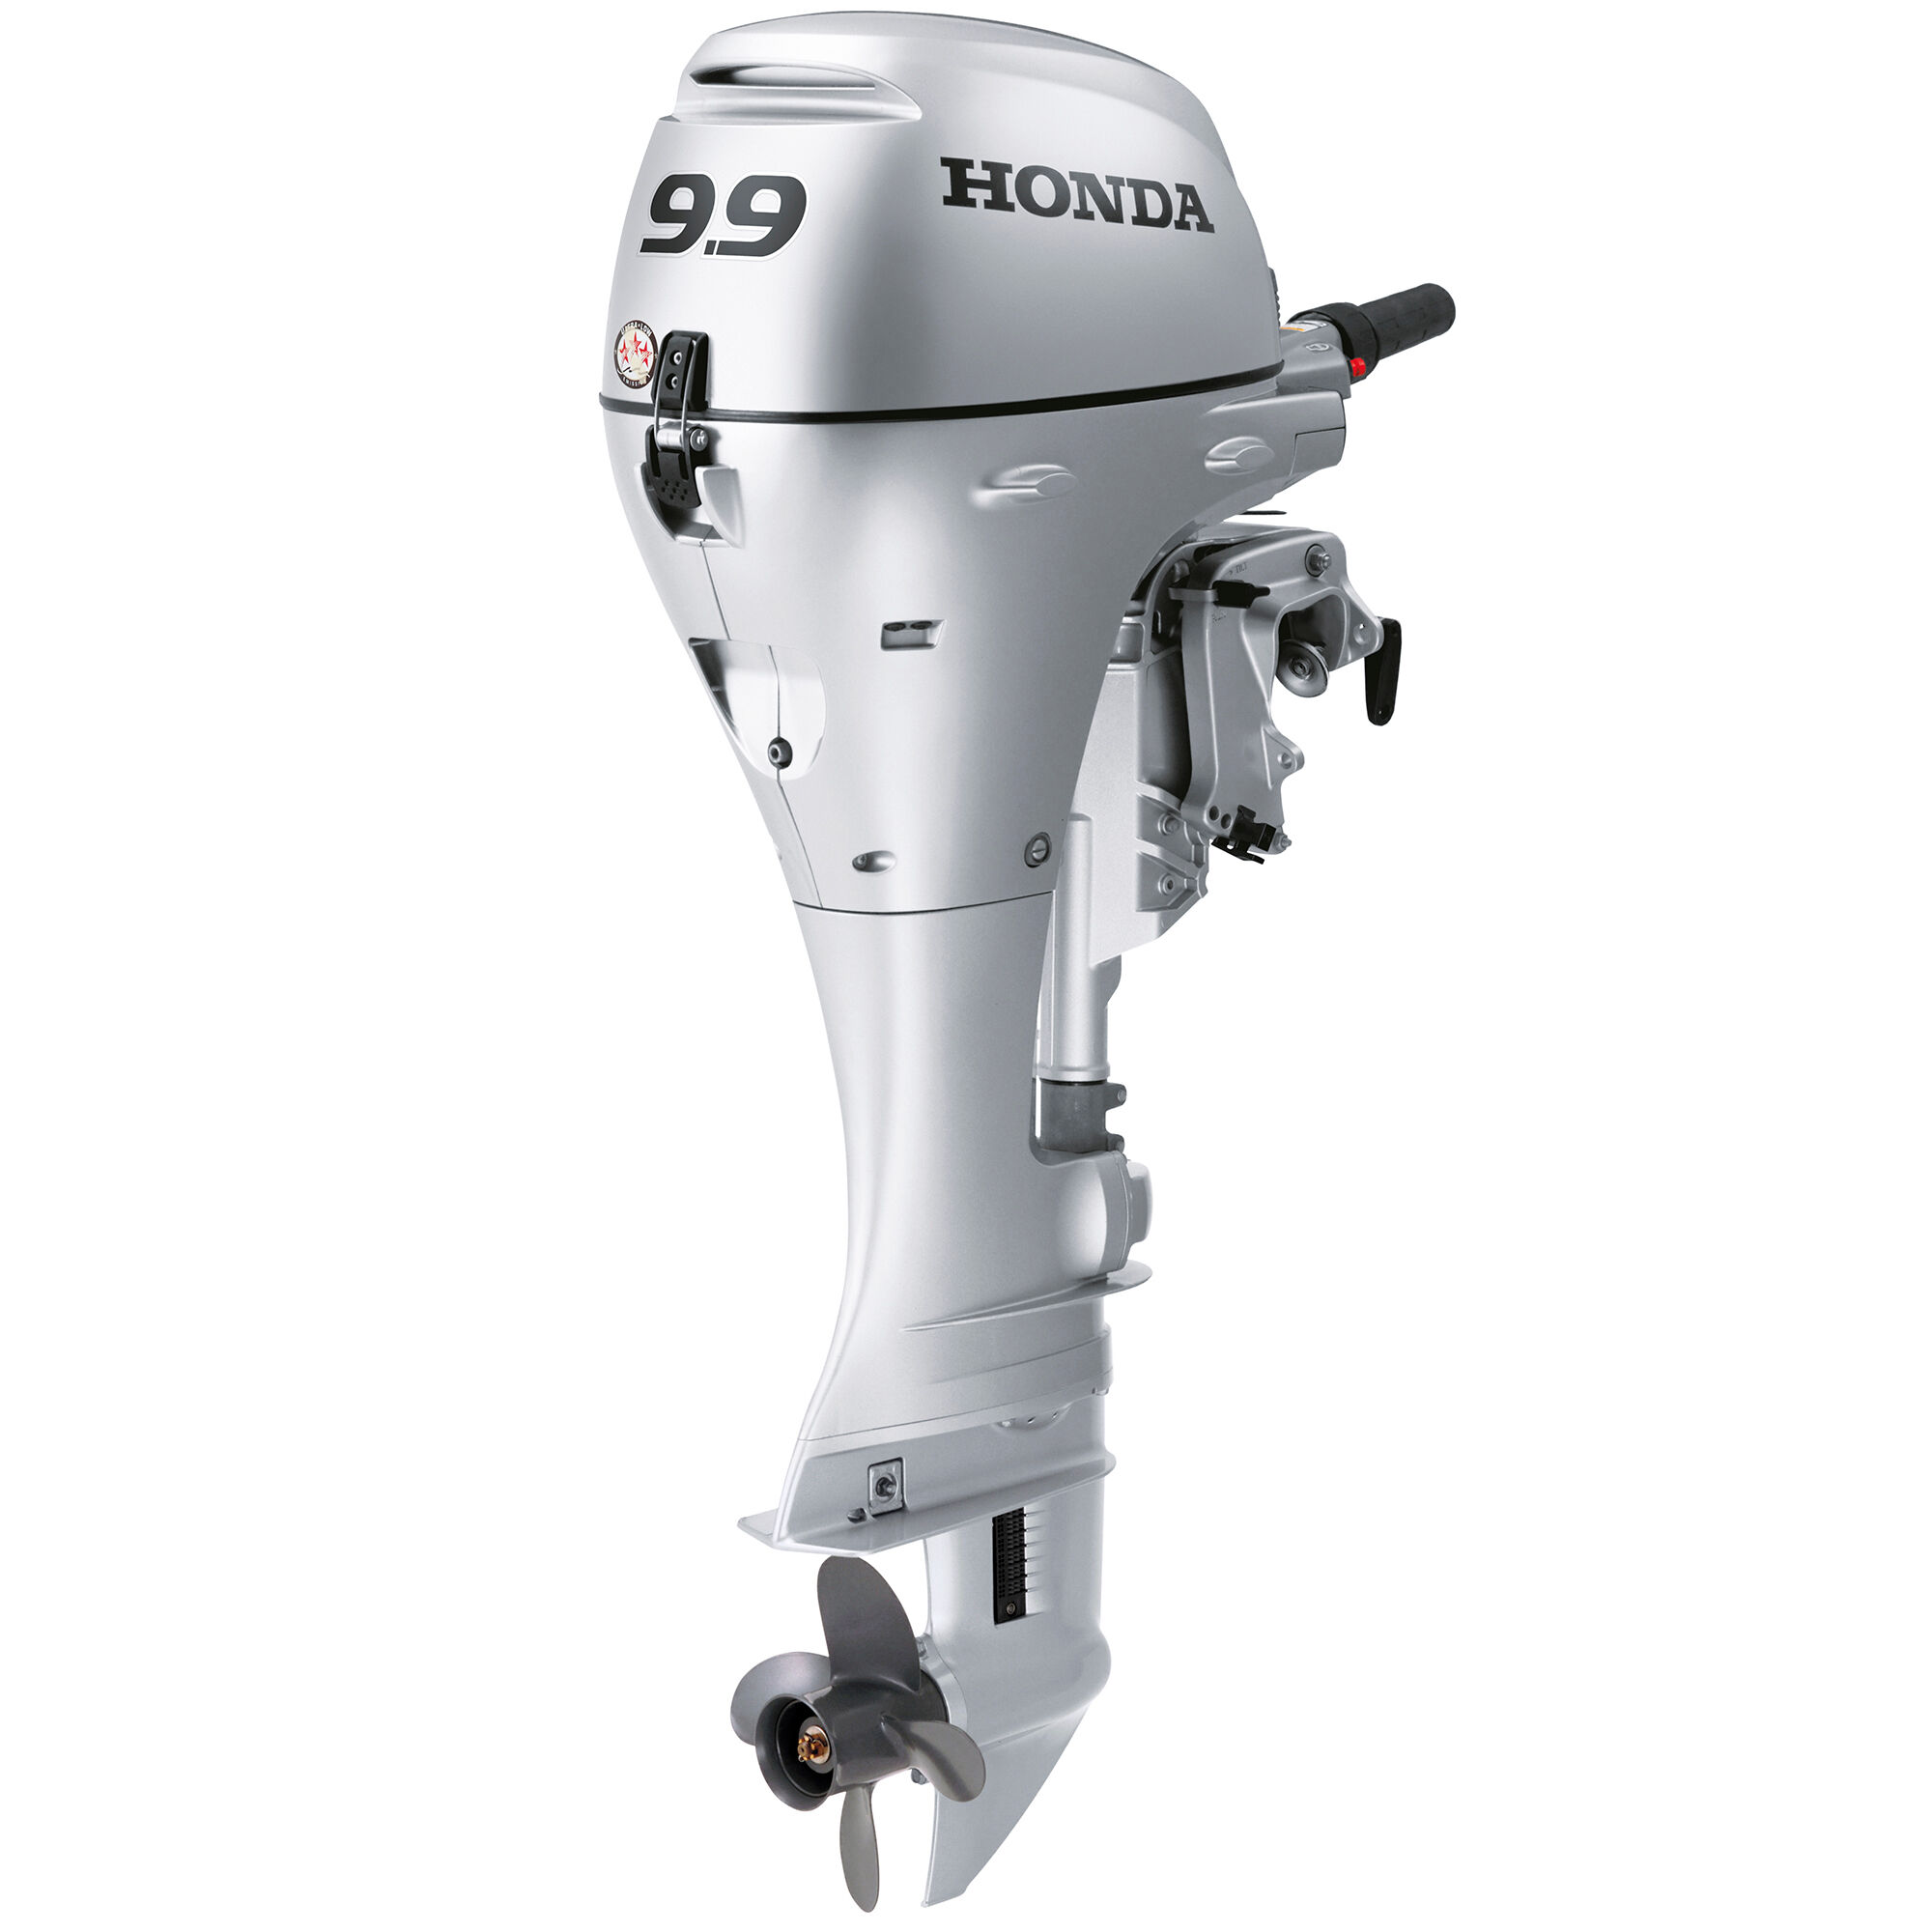 Honda Marine BF9.9 Portable Outboard Motor, Electric Start, 9.9 HP, 15" Shaft